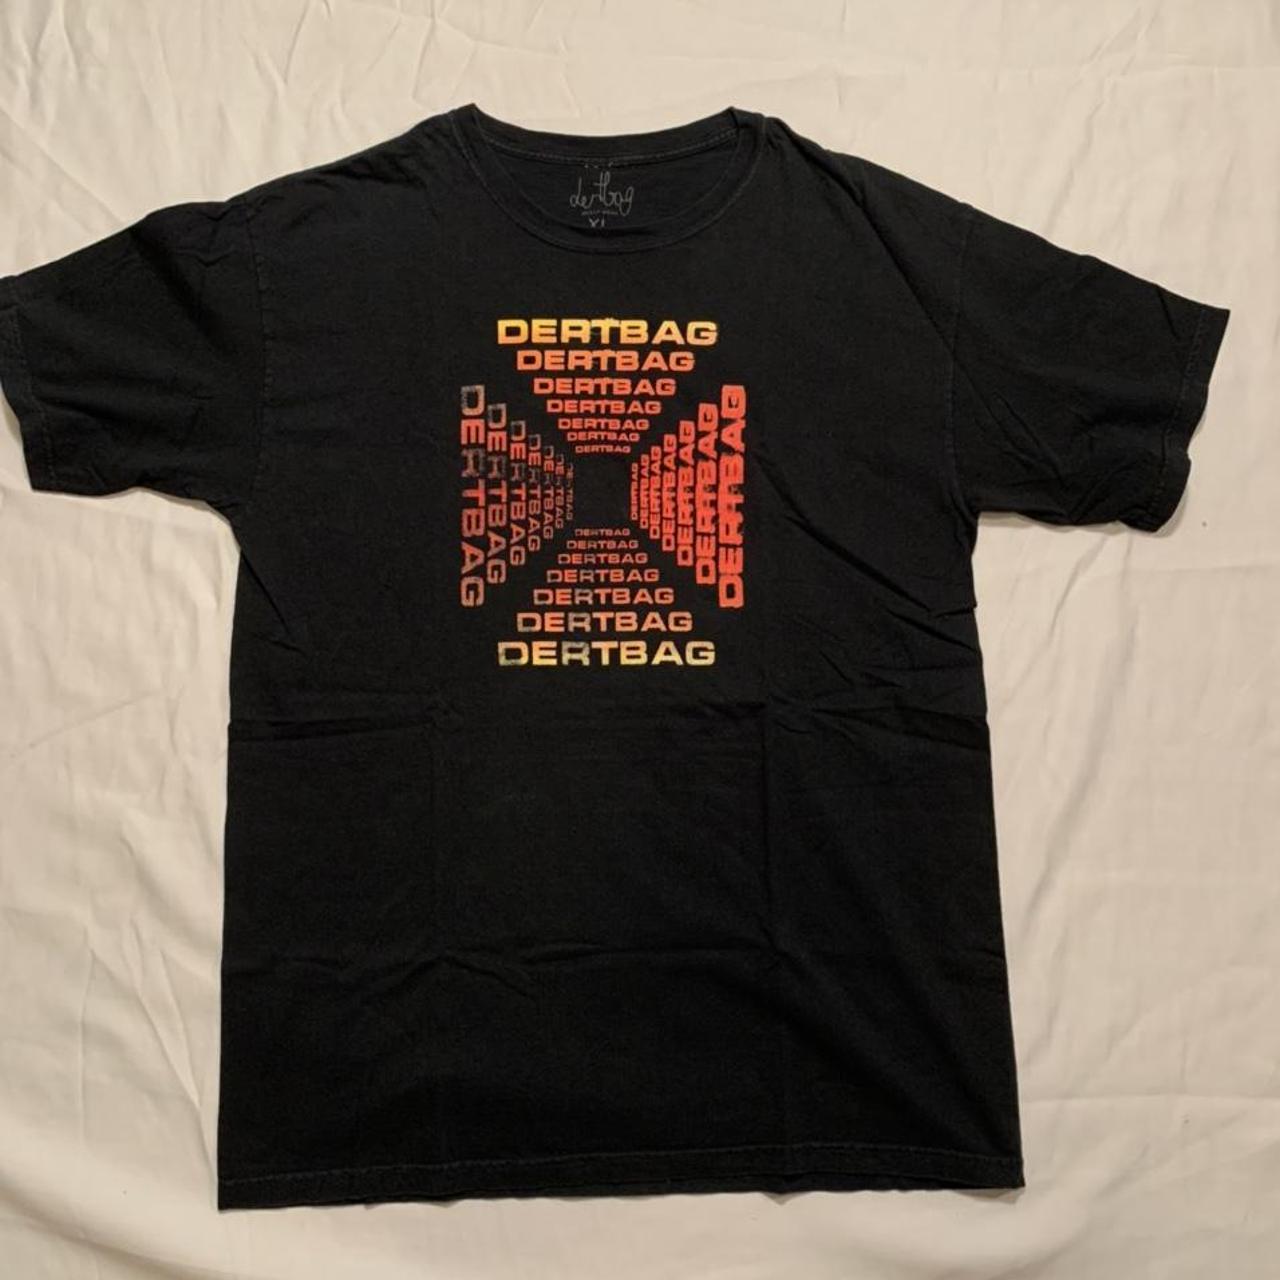 Dertbag Men's Black and Red T-shirt